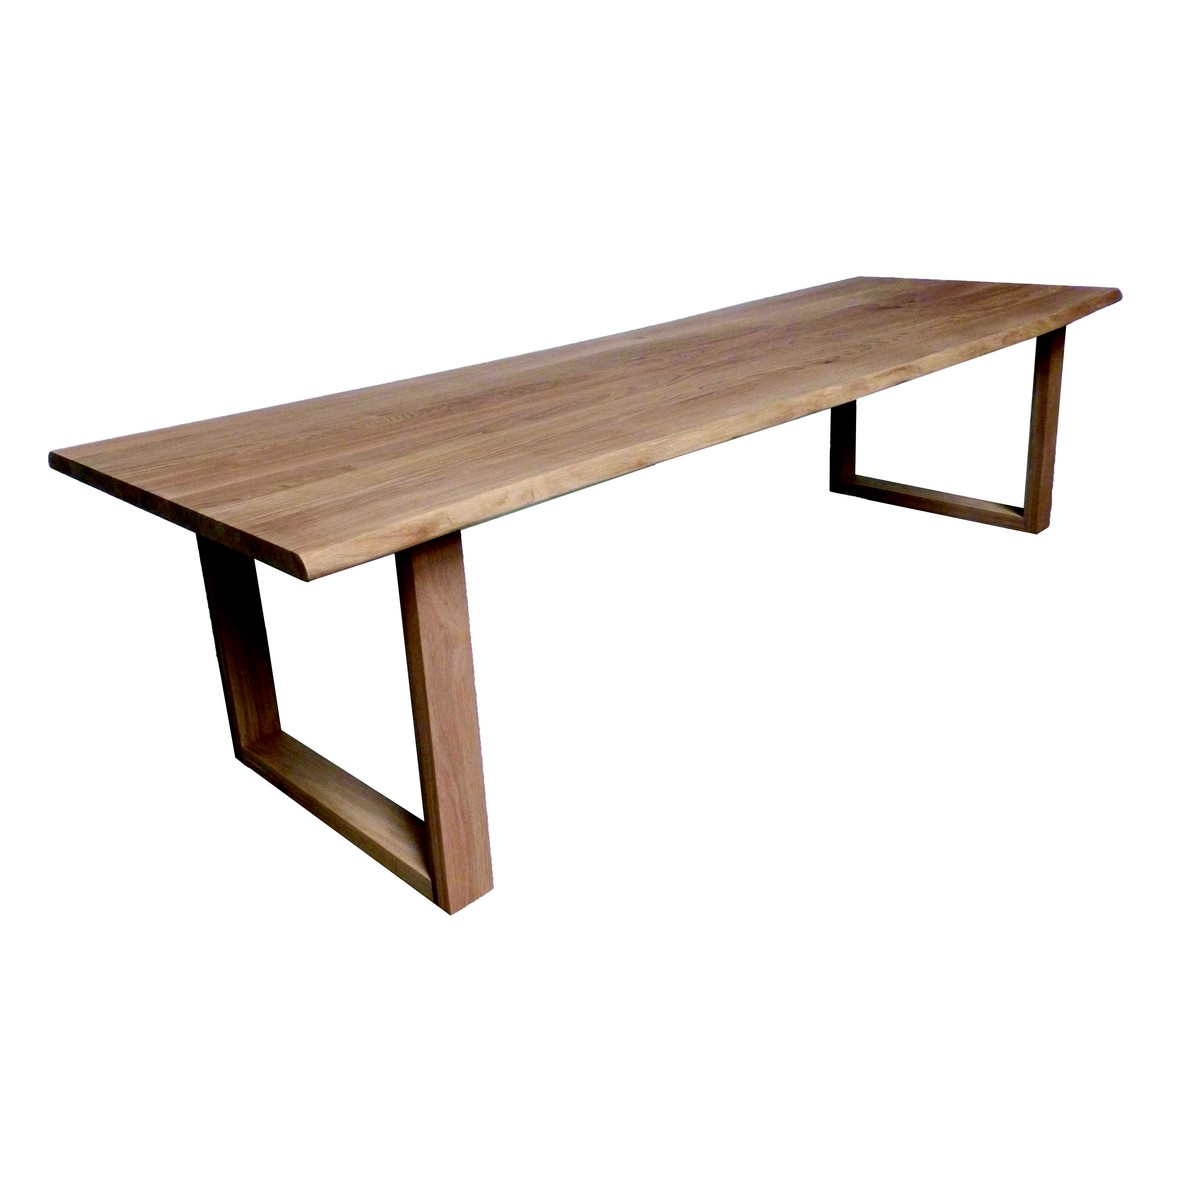   Table haute Daly Trunk rectangulaire  300x100x90cm